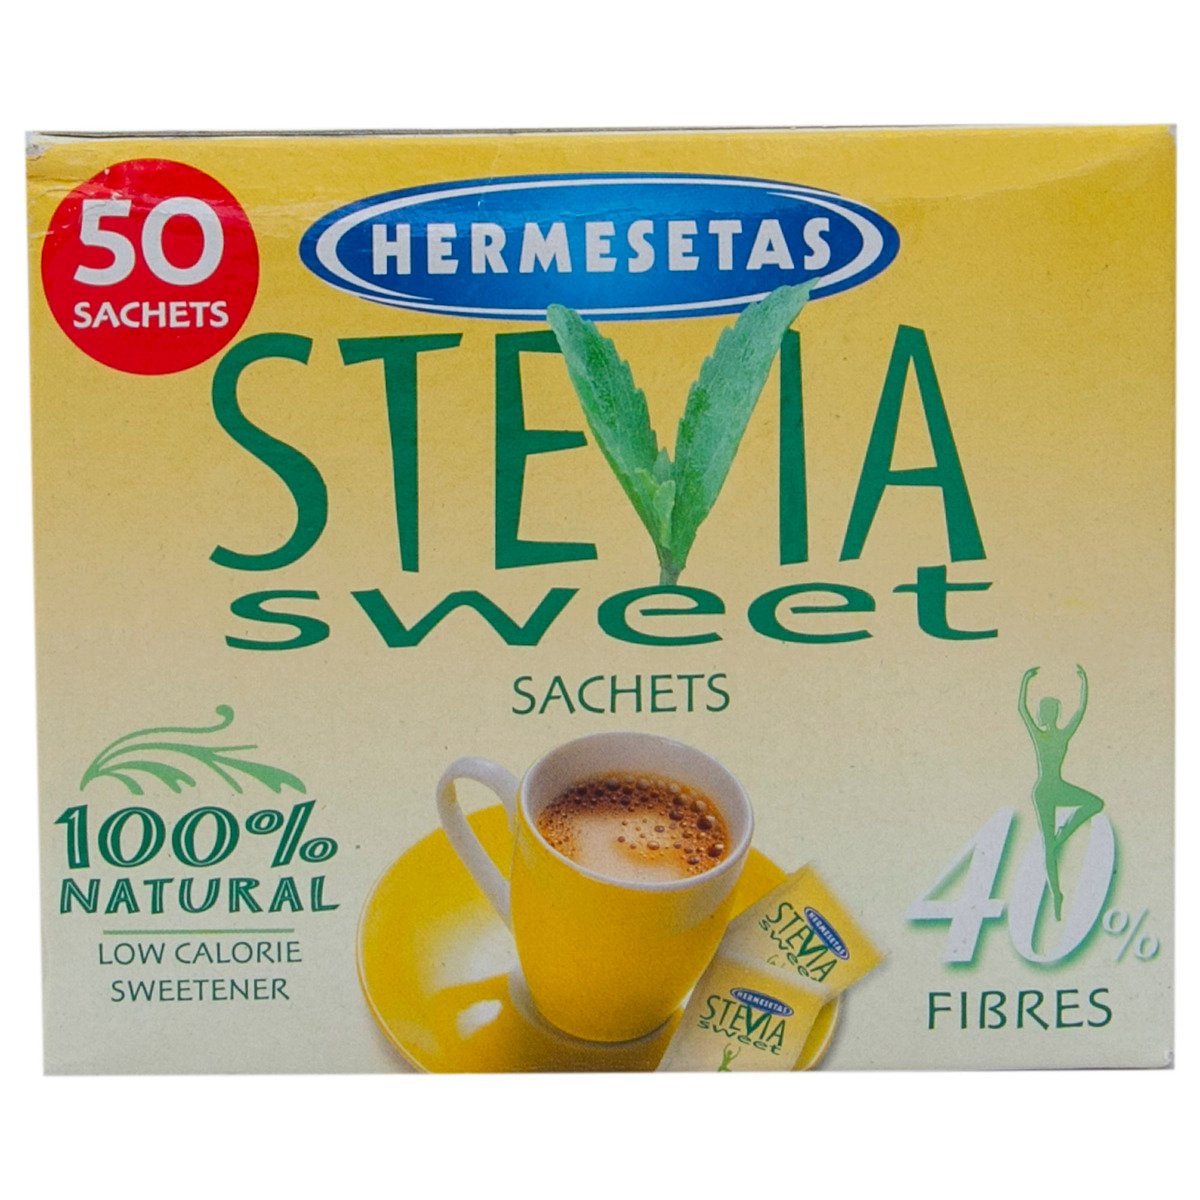 Hermesetas Stevia Sweet Sachets 50 pcs